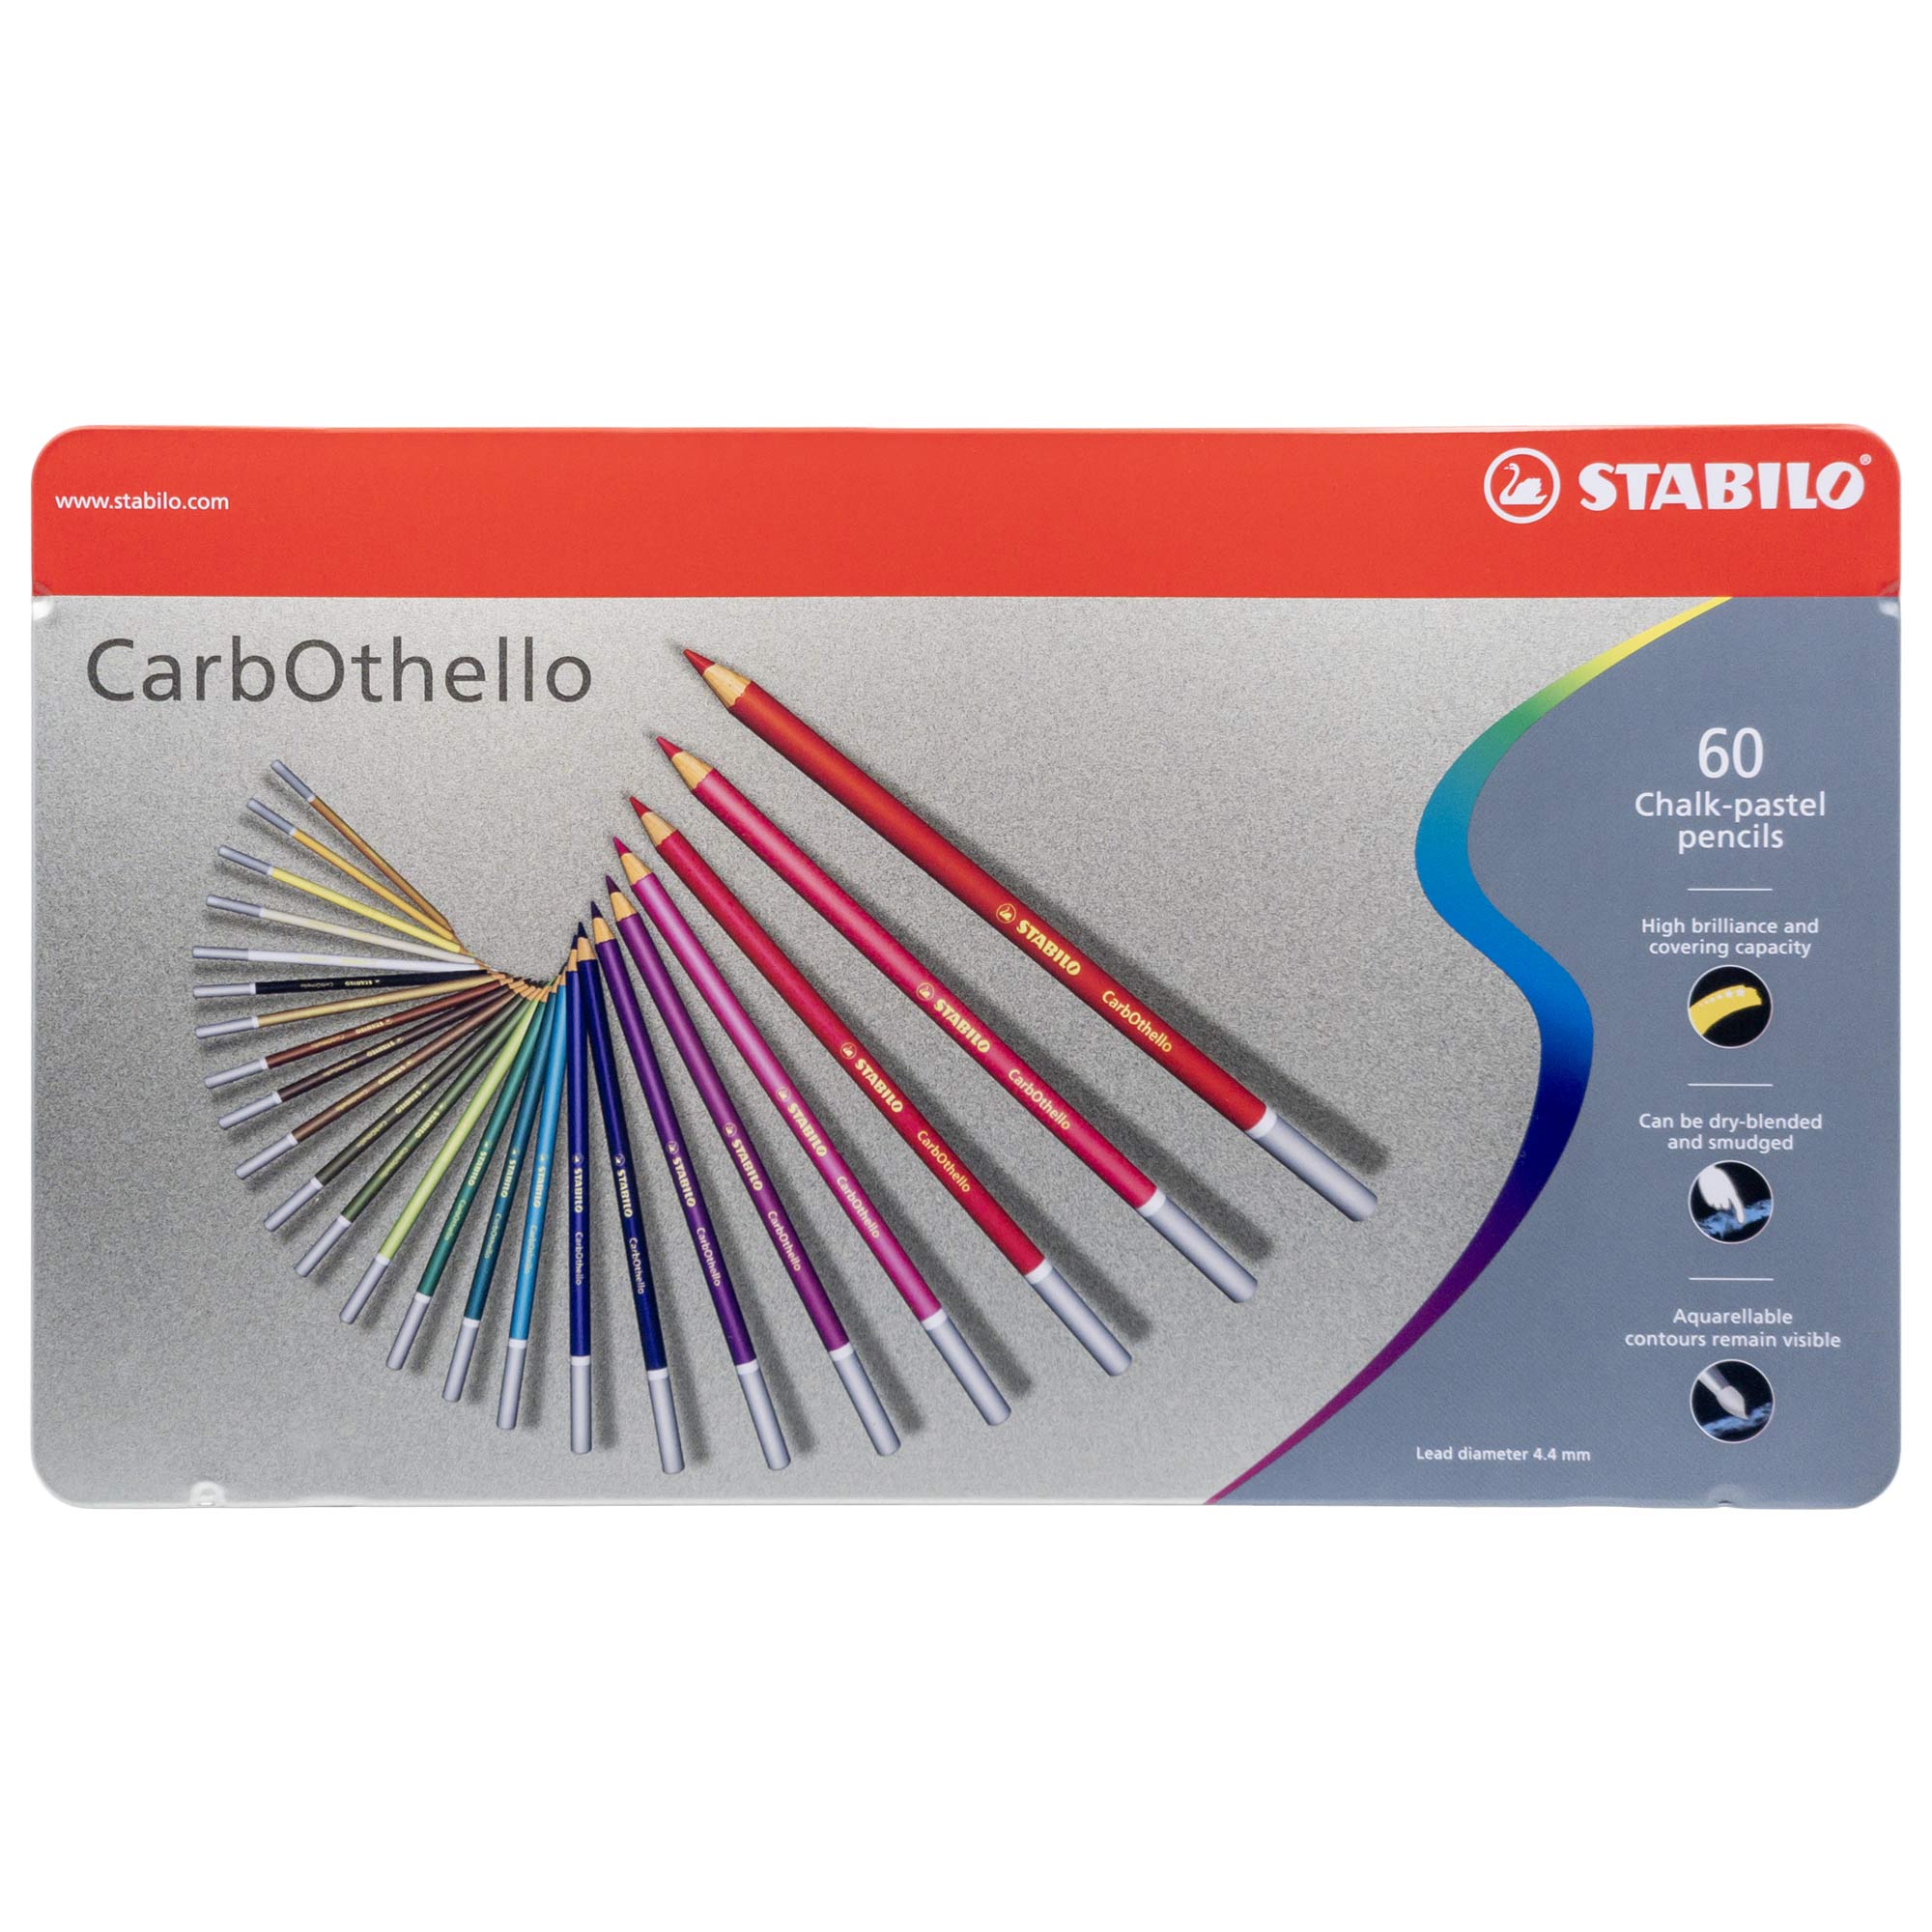 Stabilo Carbothello Chalk Pastel Pencils - Assorted Colours - Set of 60 - Box